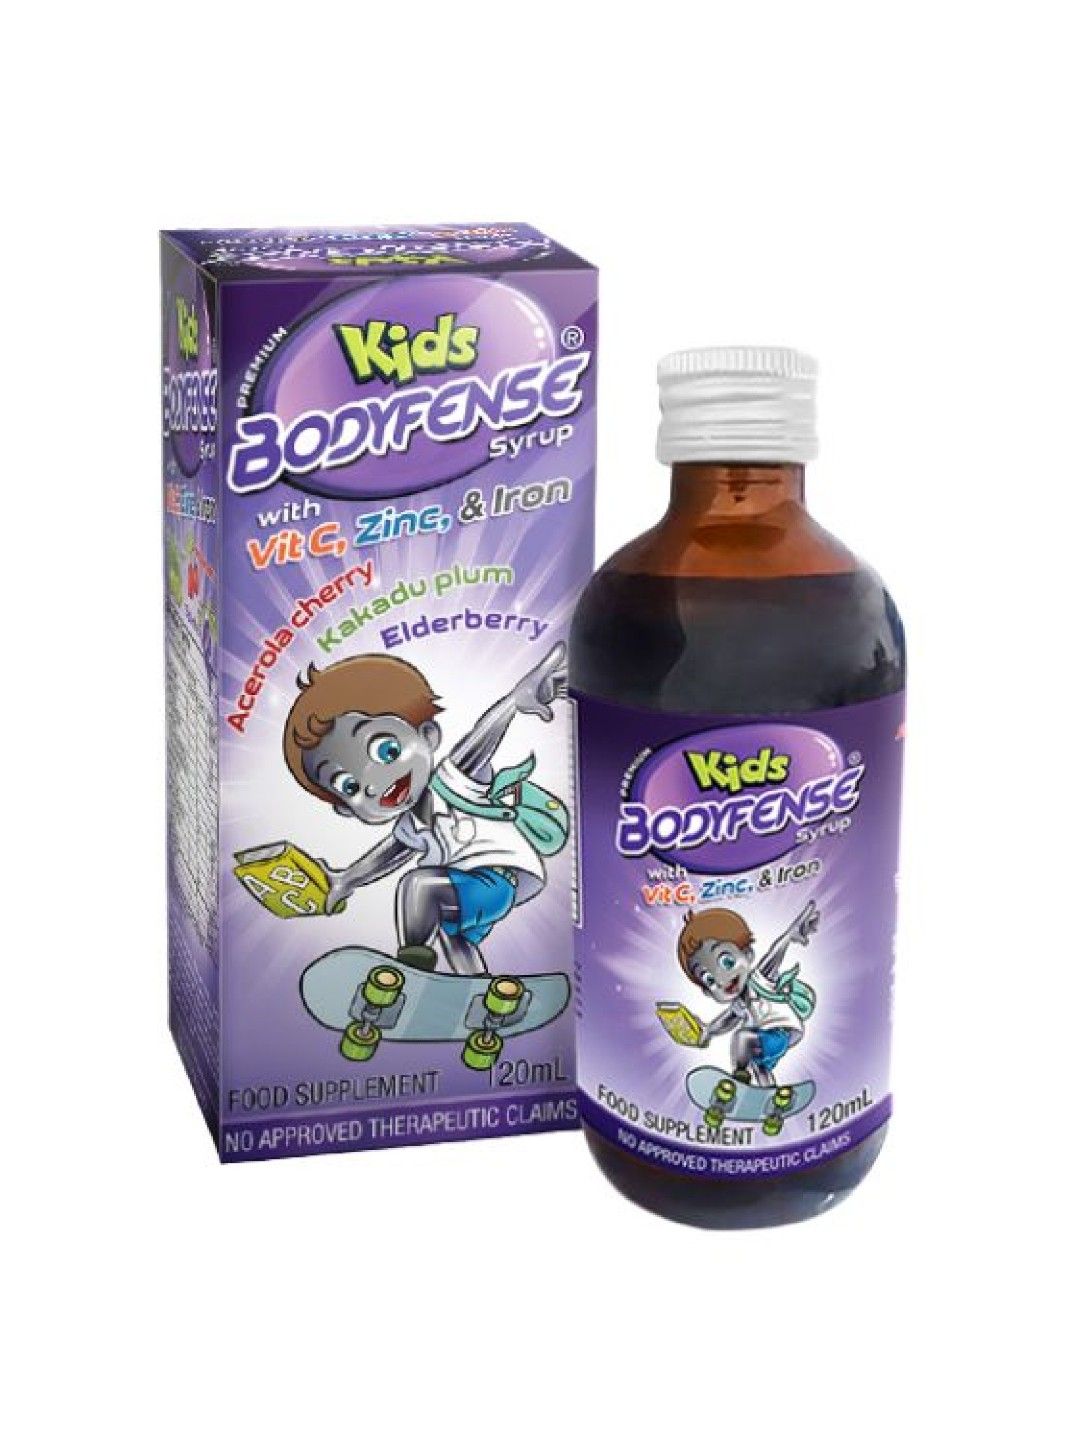 Suregetz Kids Bodyfense Syrup With Vitamin C, Zinc, And Iron